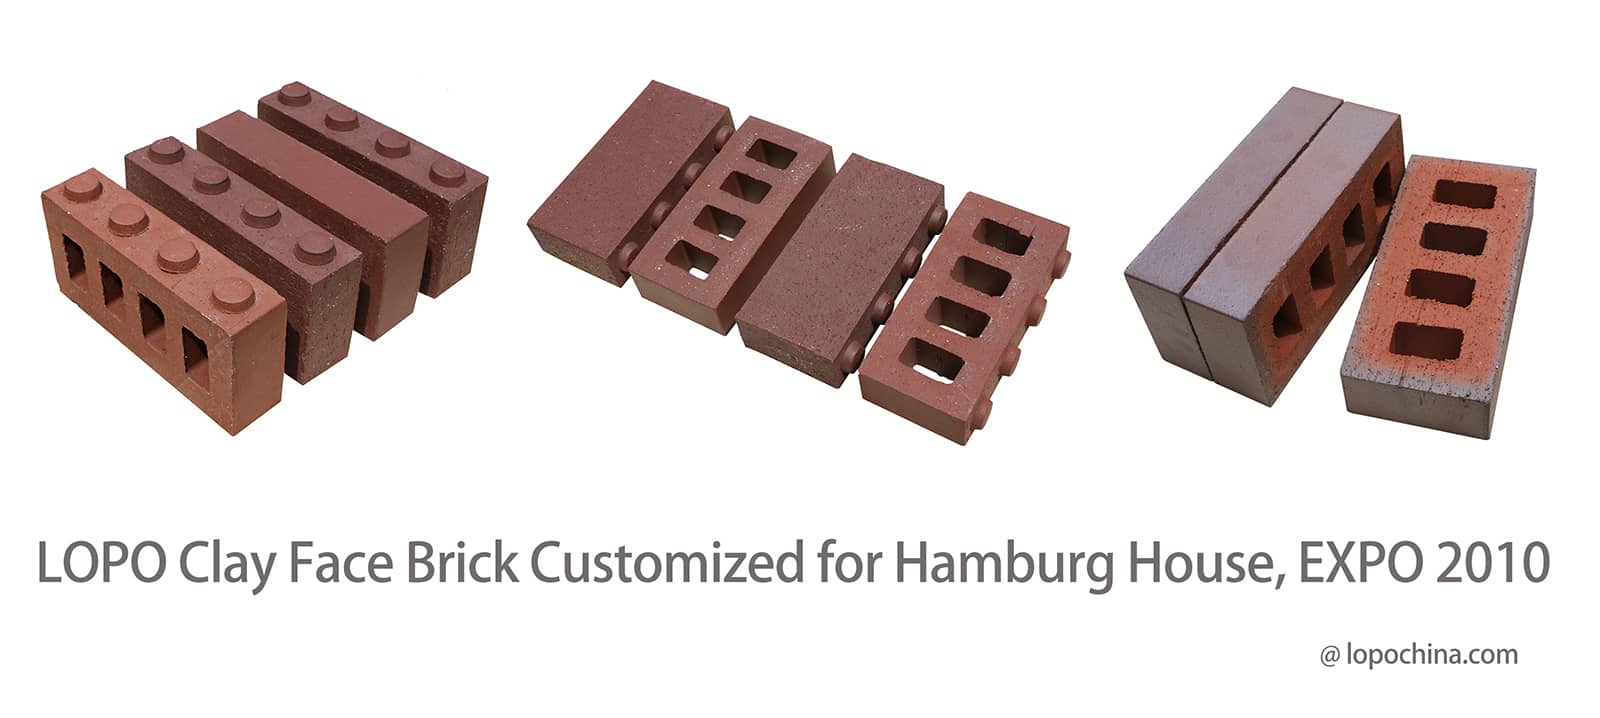 3 types of LOPO Clay face bricks customized for Hamburg House.jpg